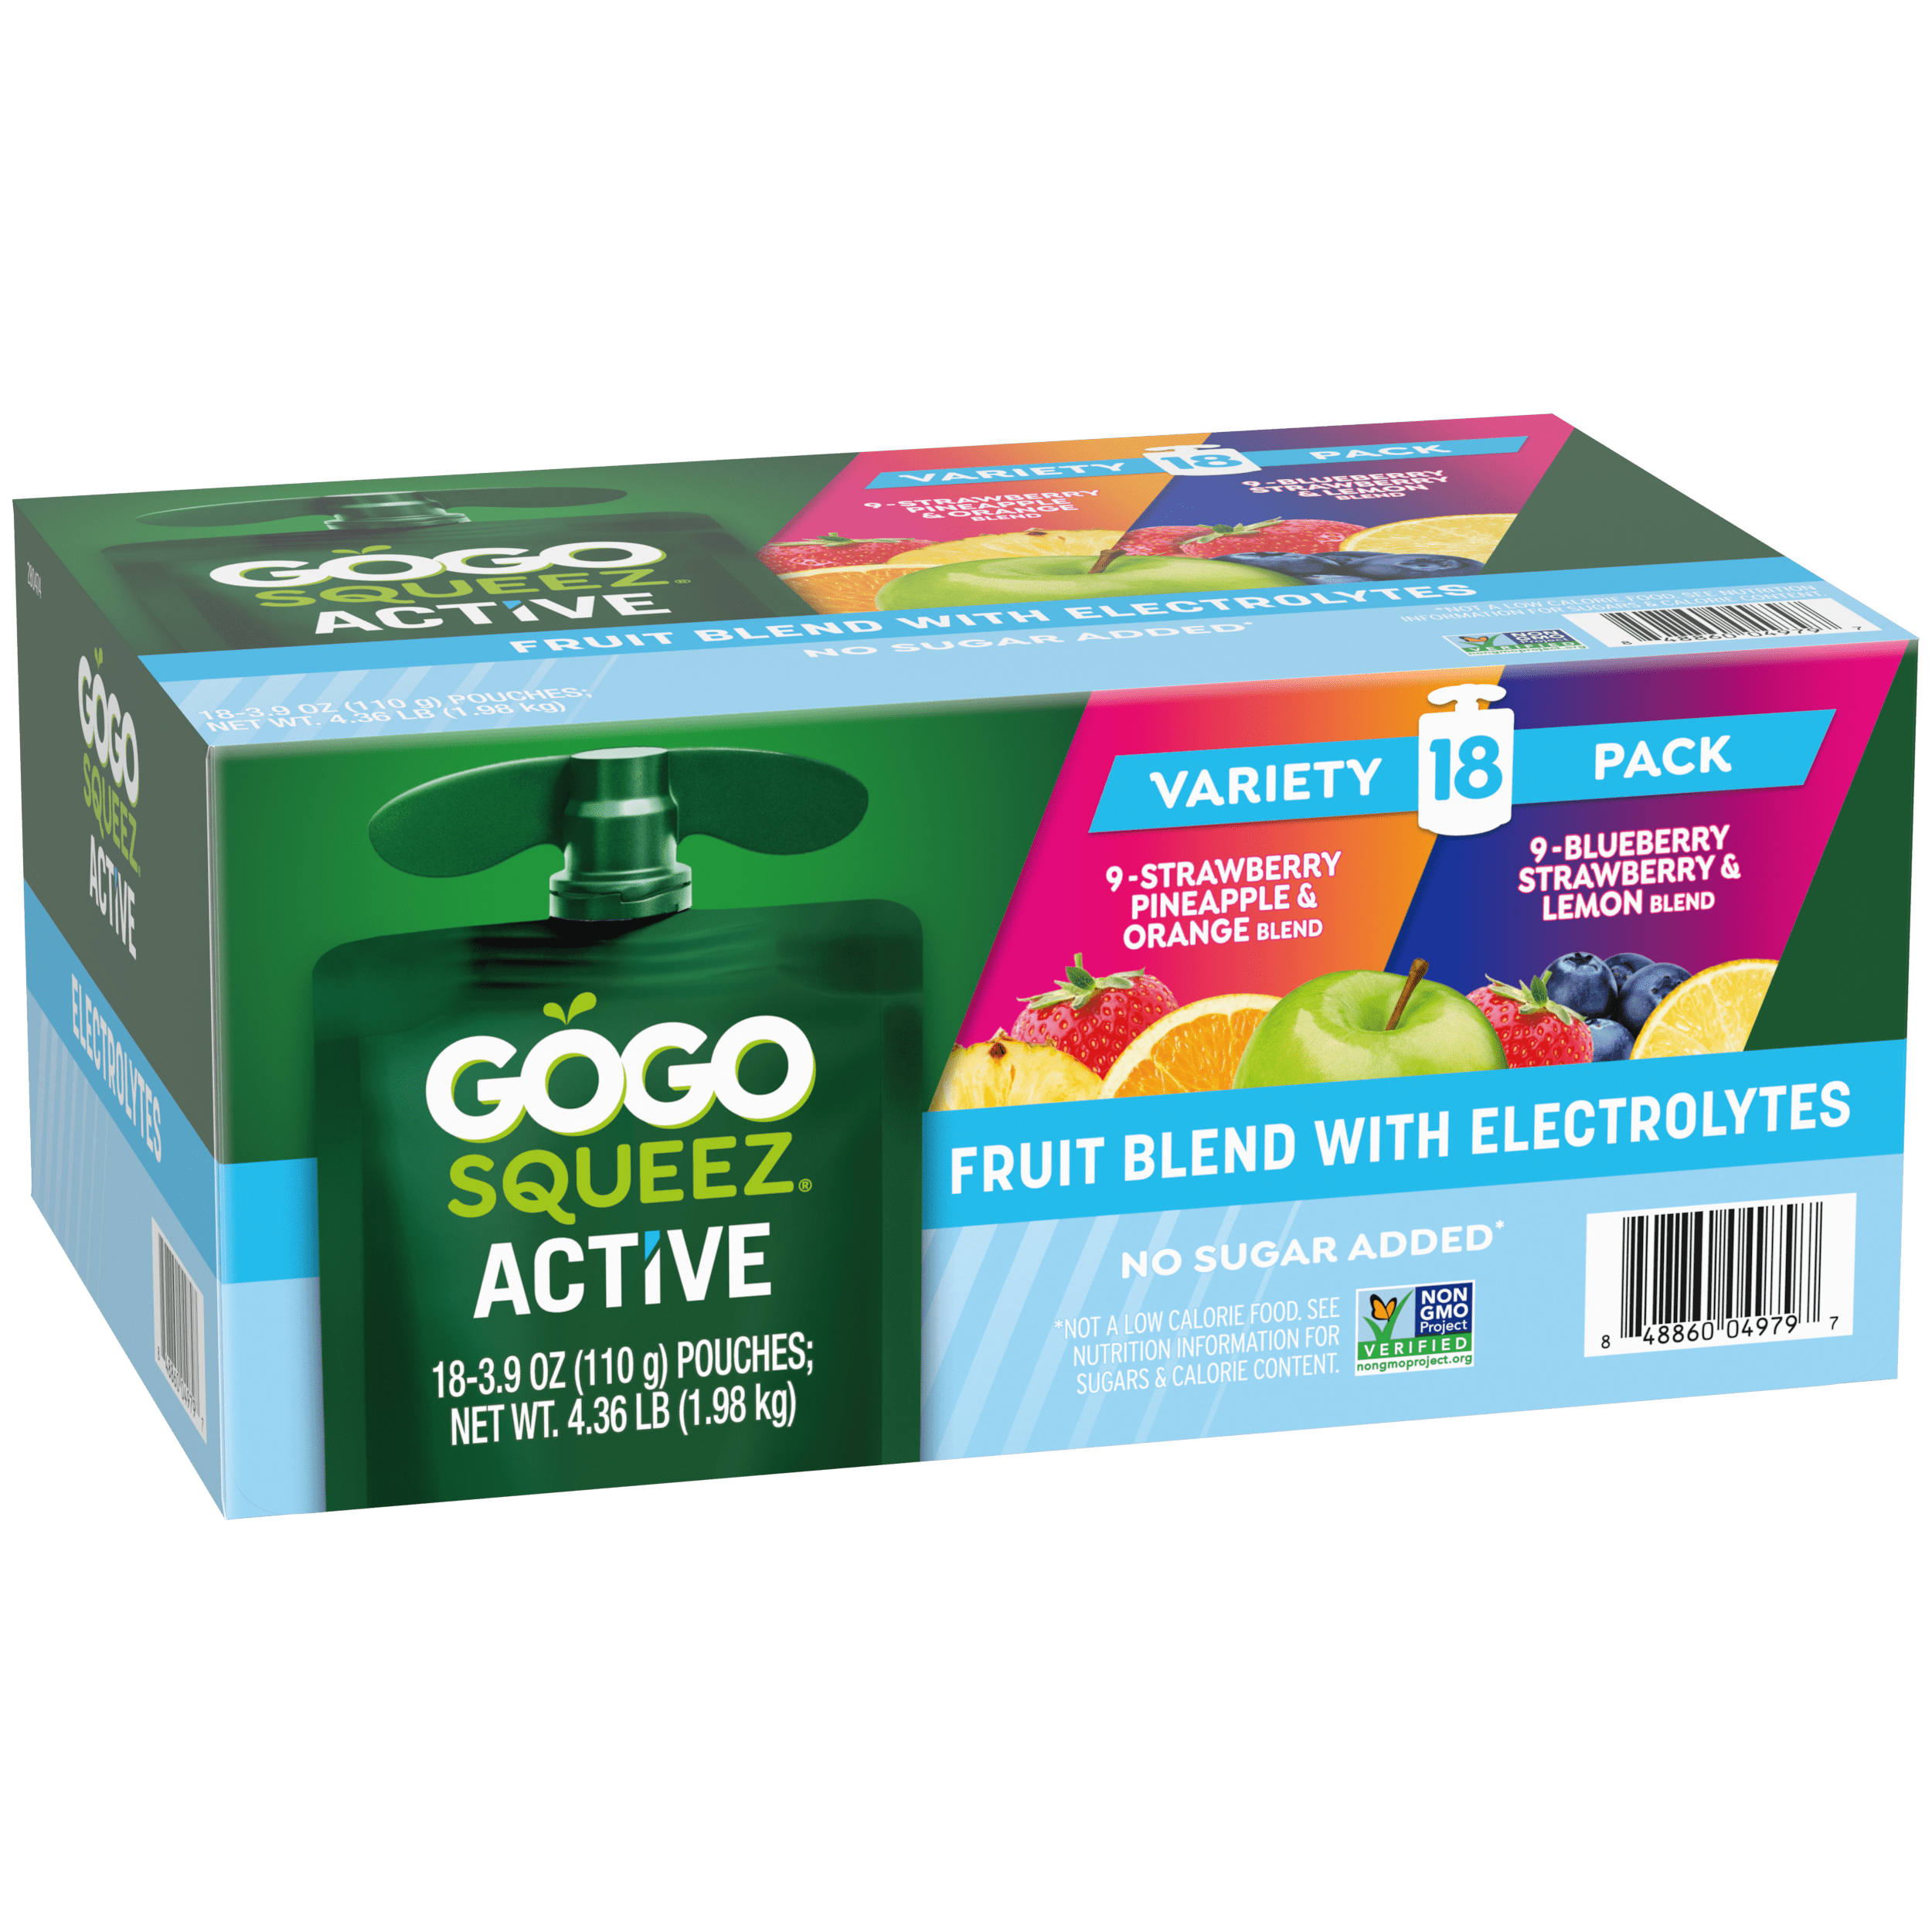 Gogo Squeez Active Fruit Blend With Electrolytes Strawberry, Pineapple & Orange; Blueberry, Strawberry & Lemon 18 Pack Product Box